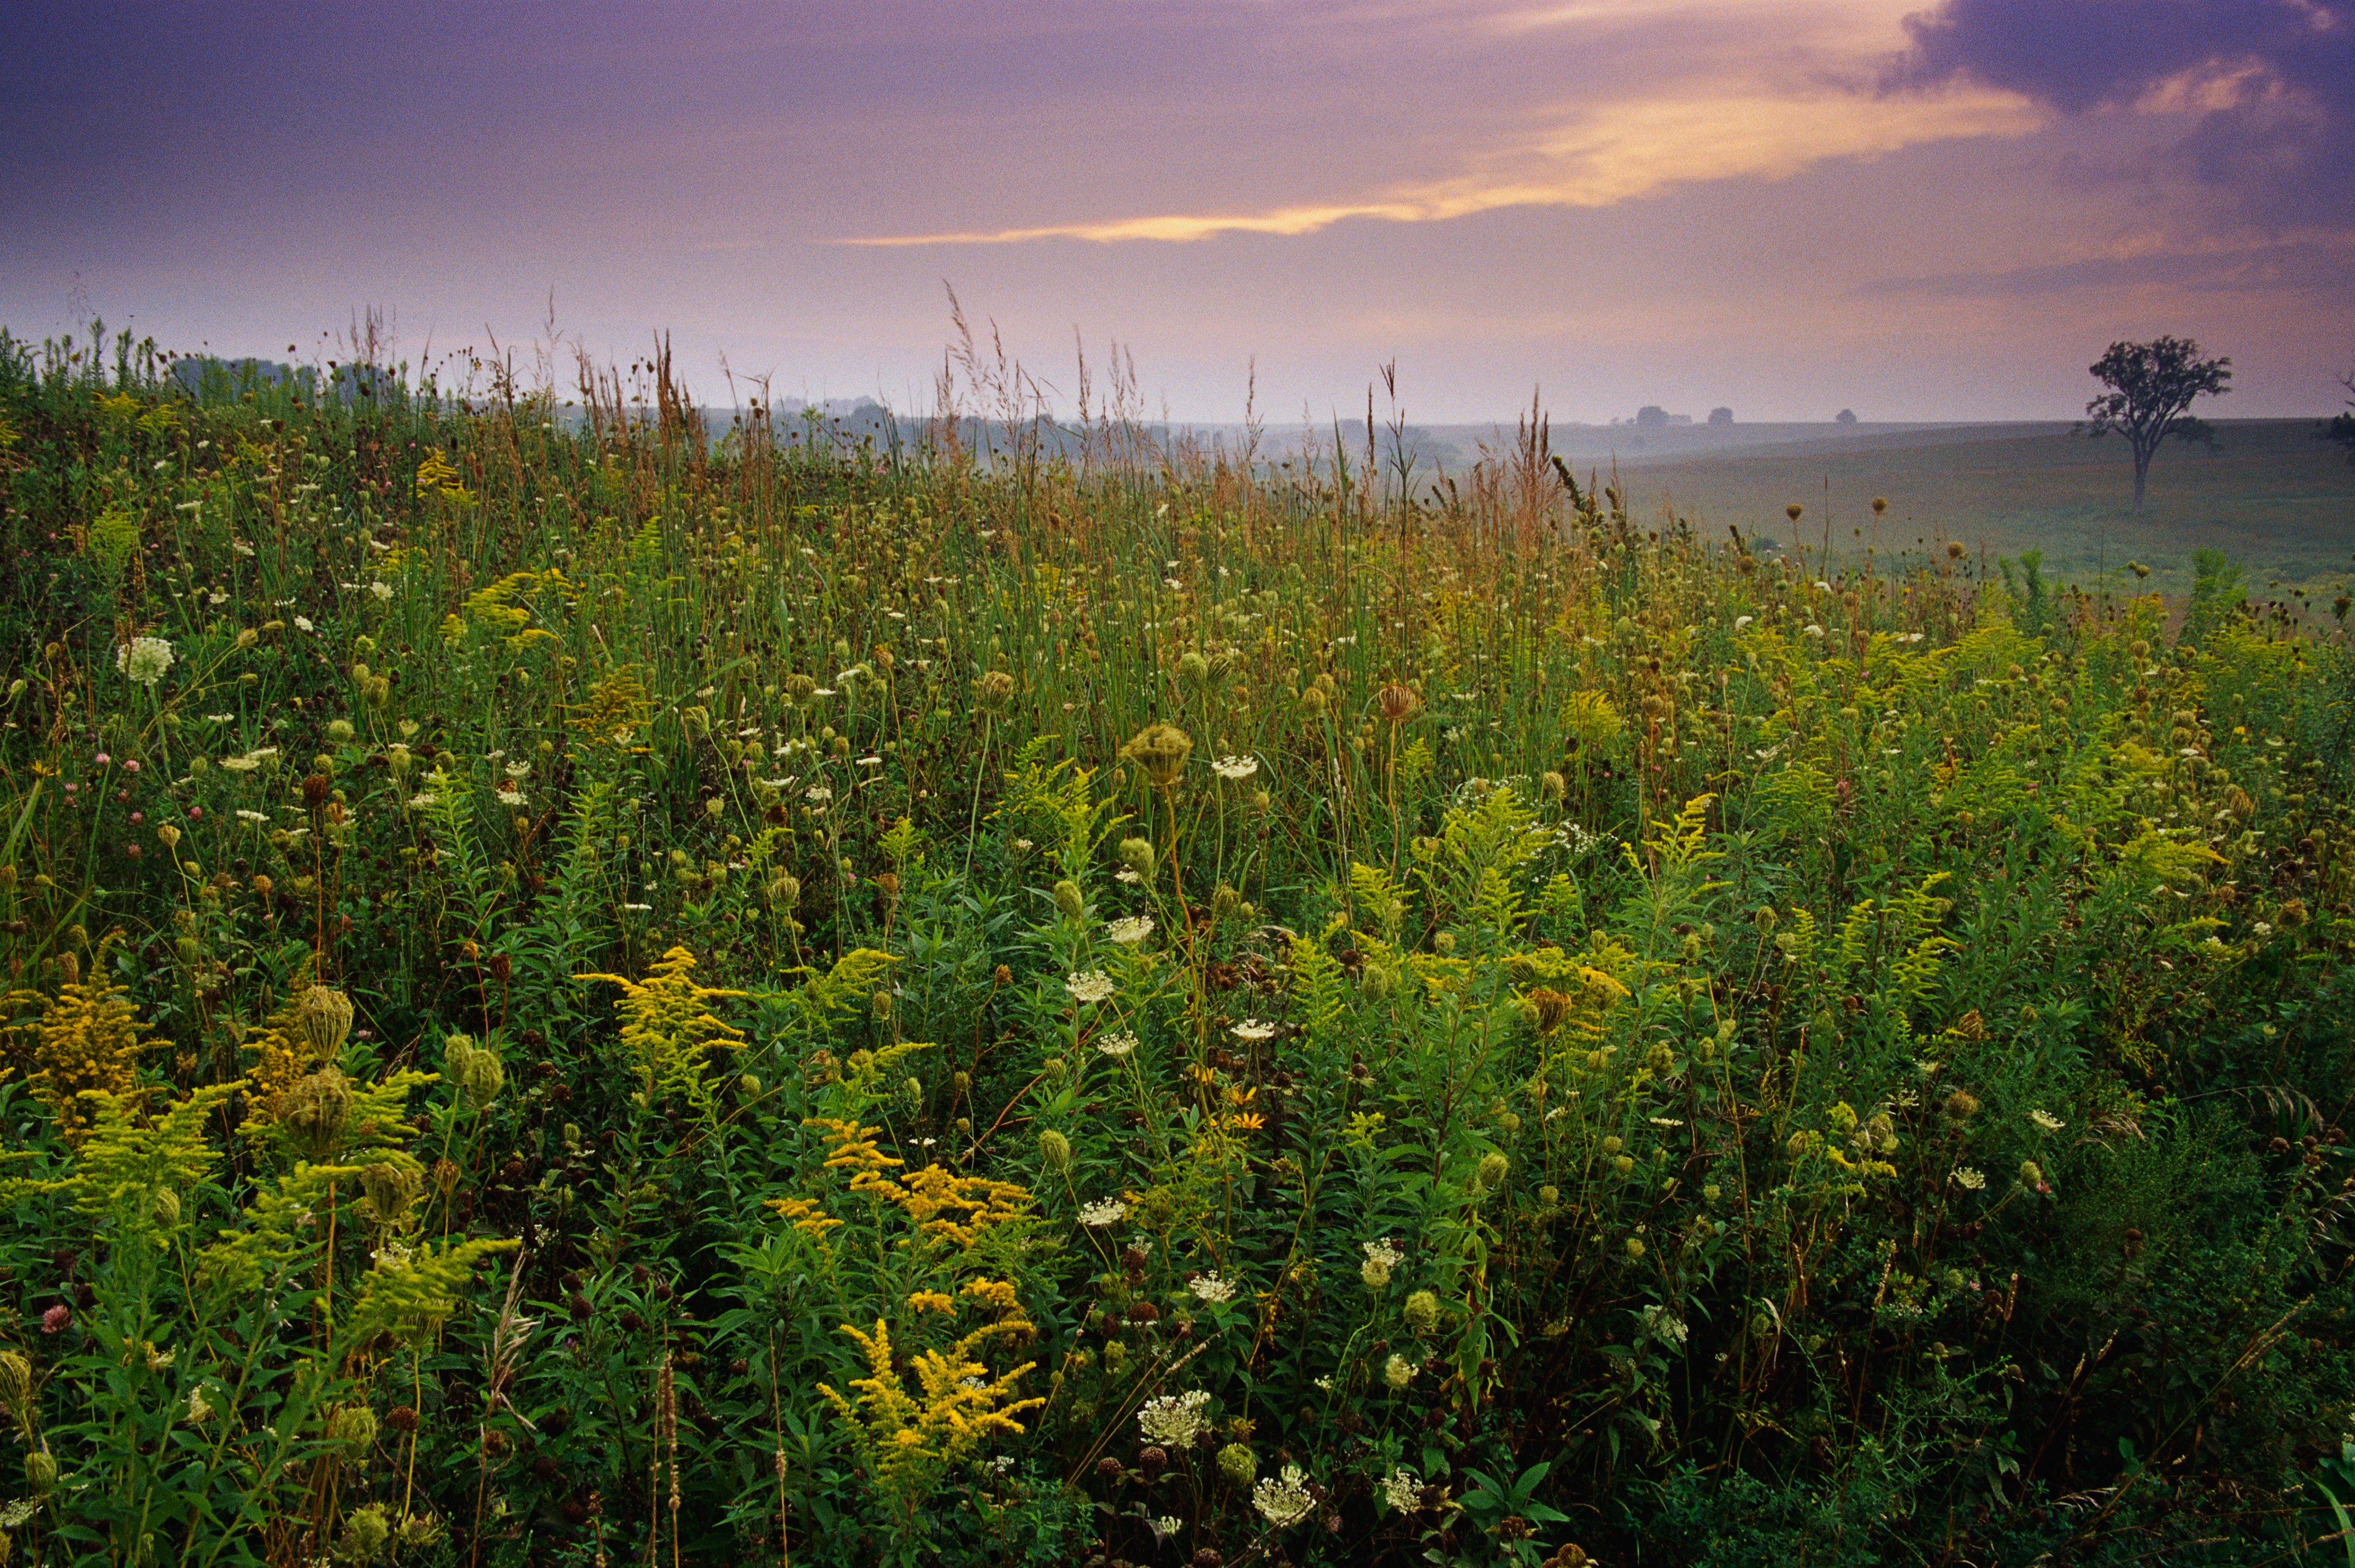 grasses-in-prairie - Iowa Pictures - Iowa - HISTORY.com